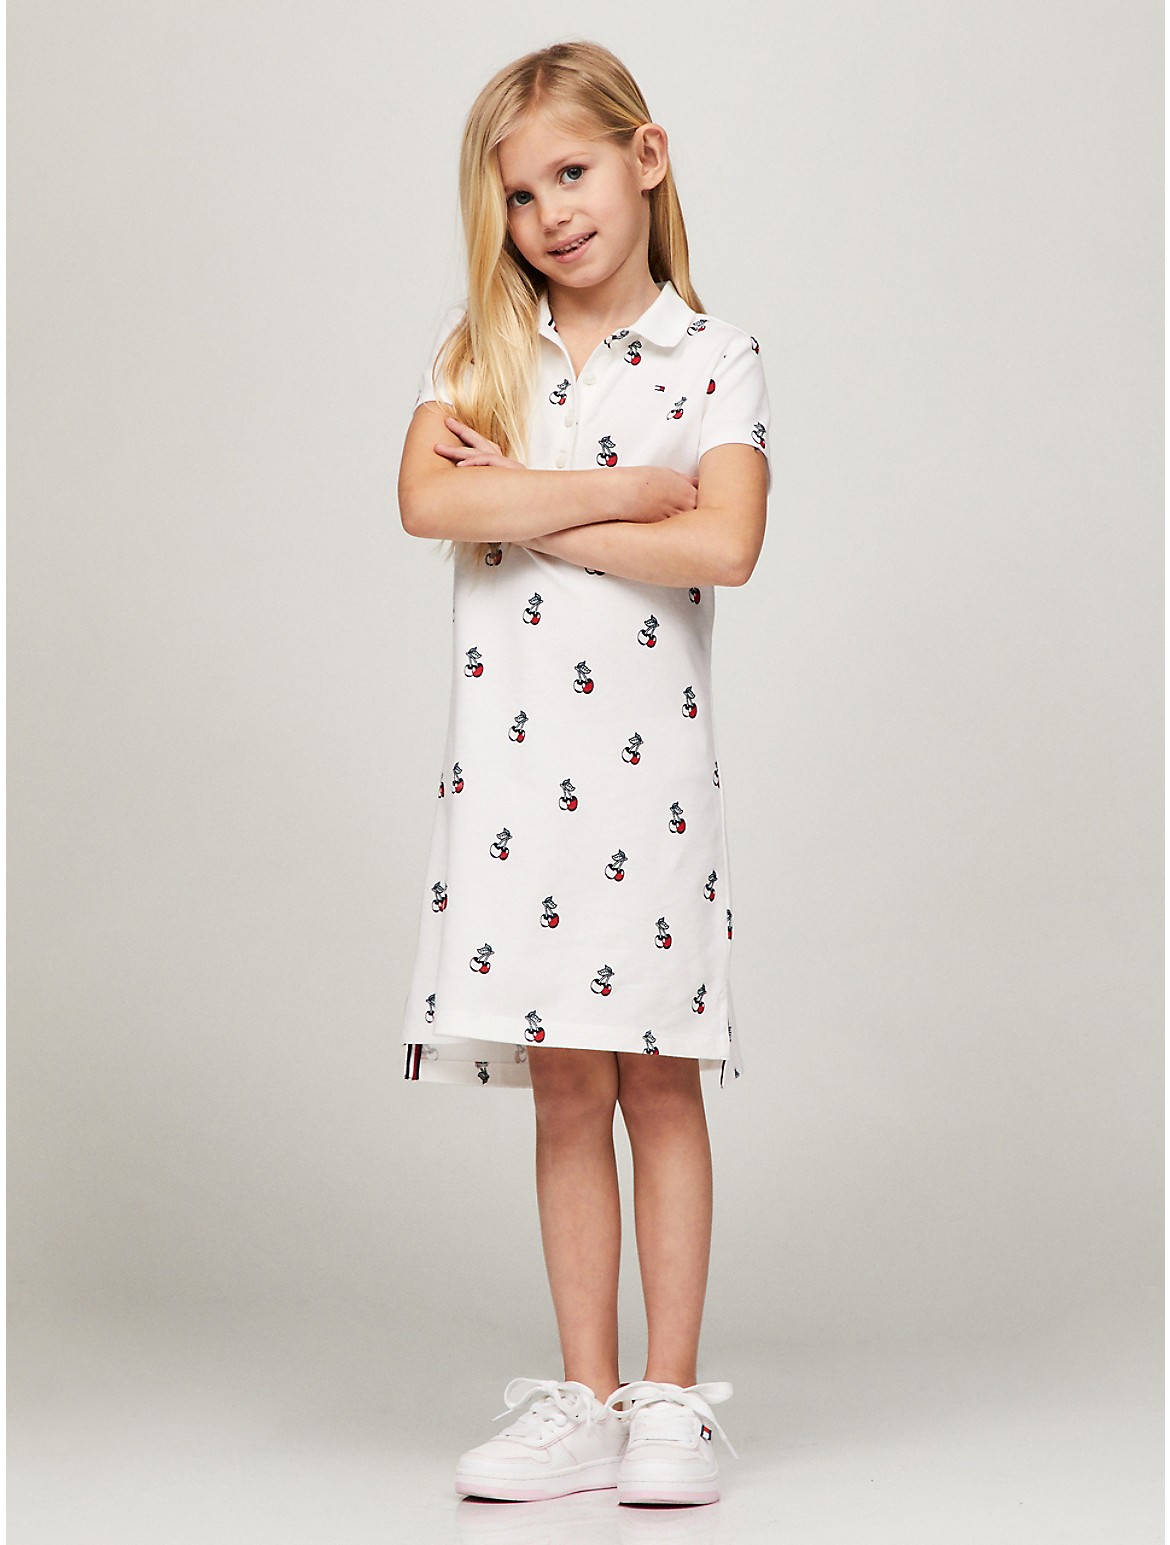 Tommy Hilfiger Girls' Kids' Cherry Stretch Pique Polo Dress - White - XXS